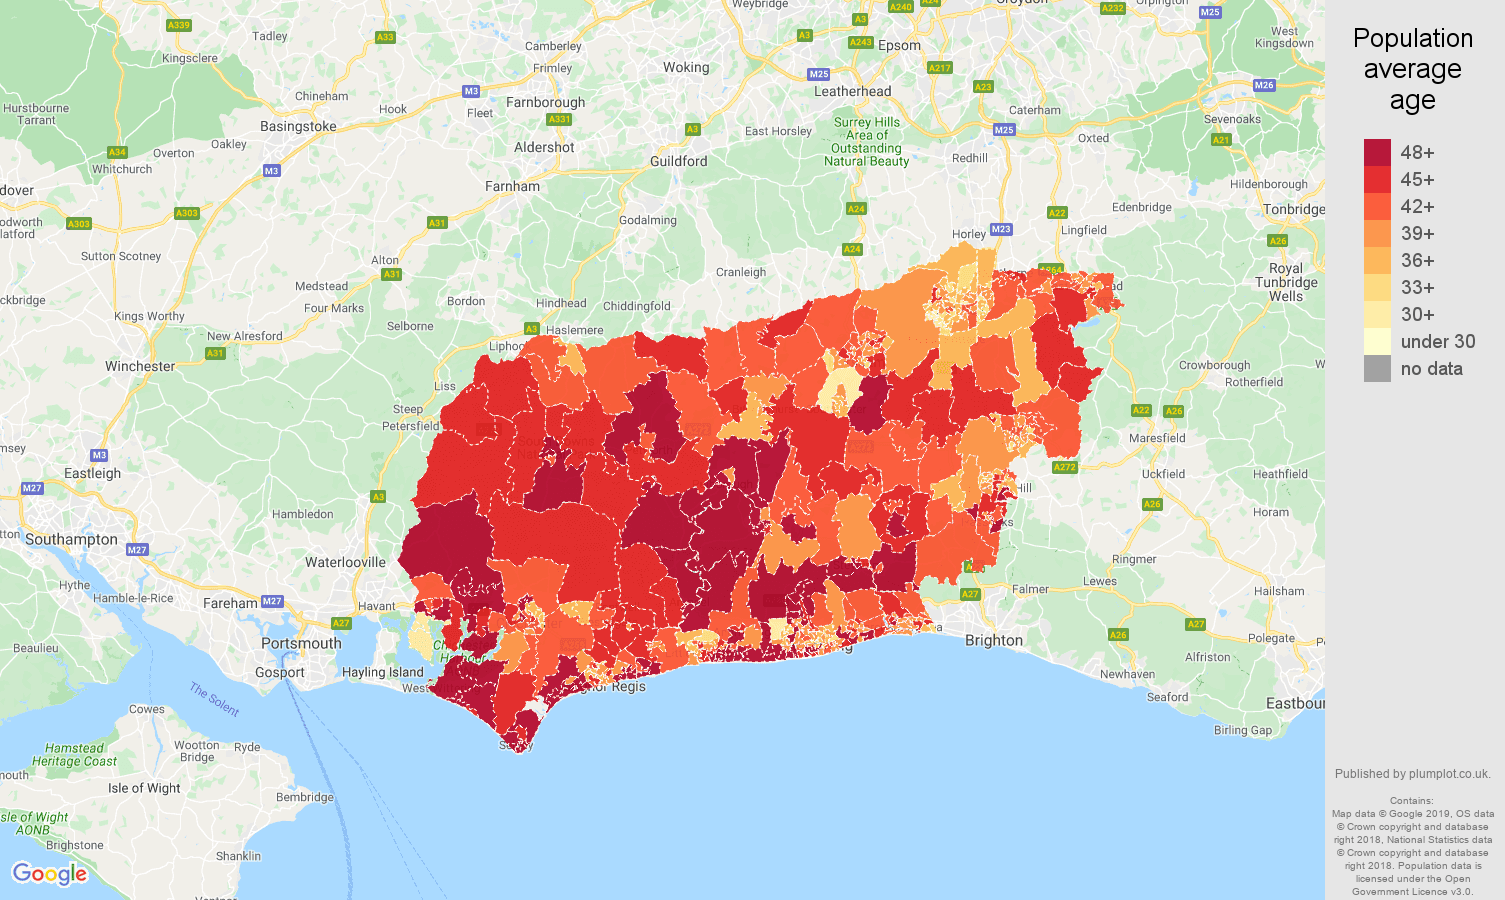 West Sussex population average age map